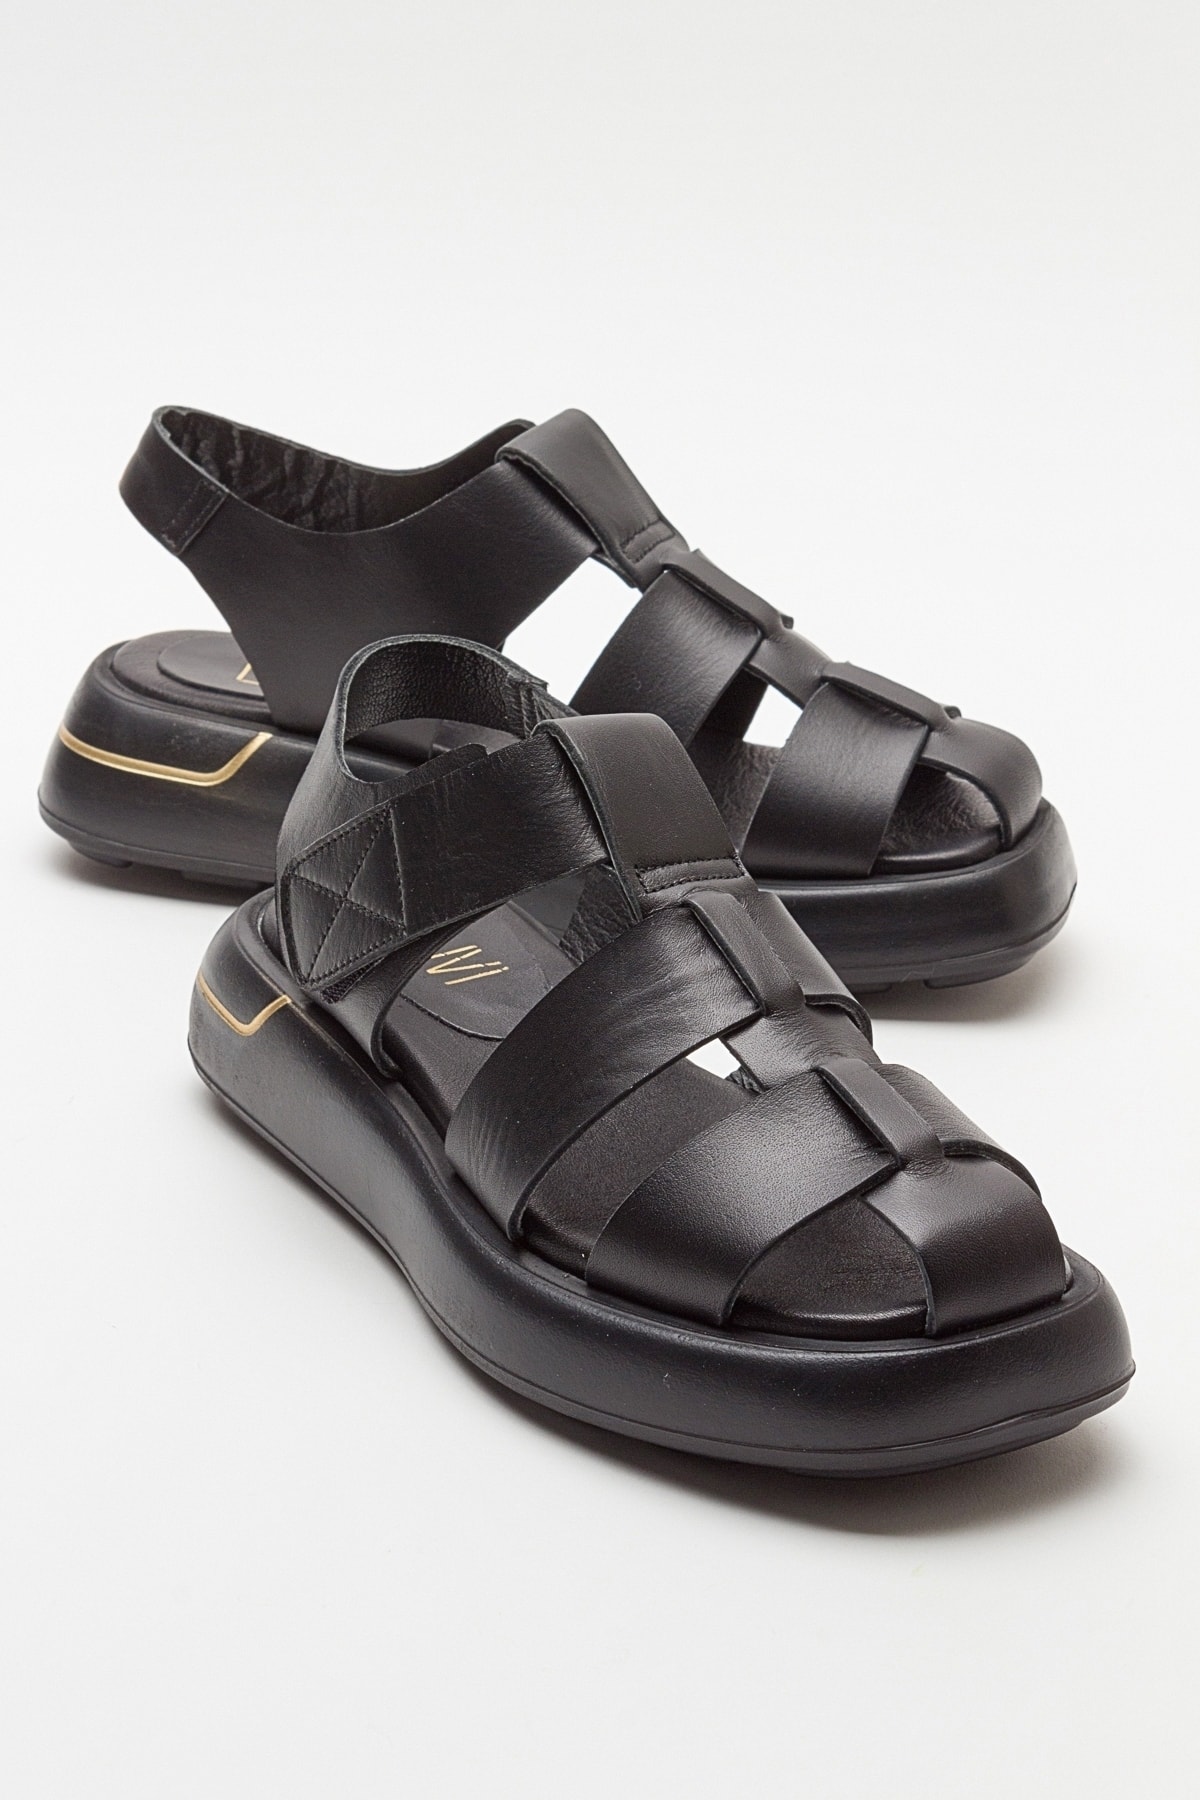 LuviShoes BELIV Women's Black Skin Genuine Leather Sandals